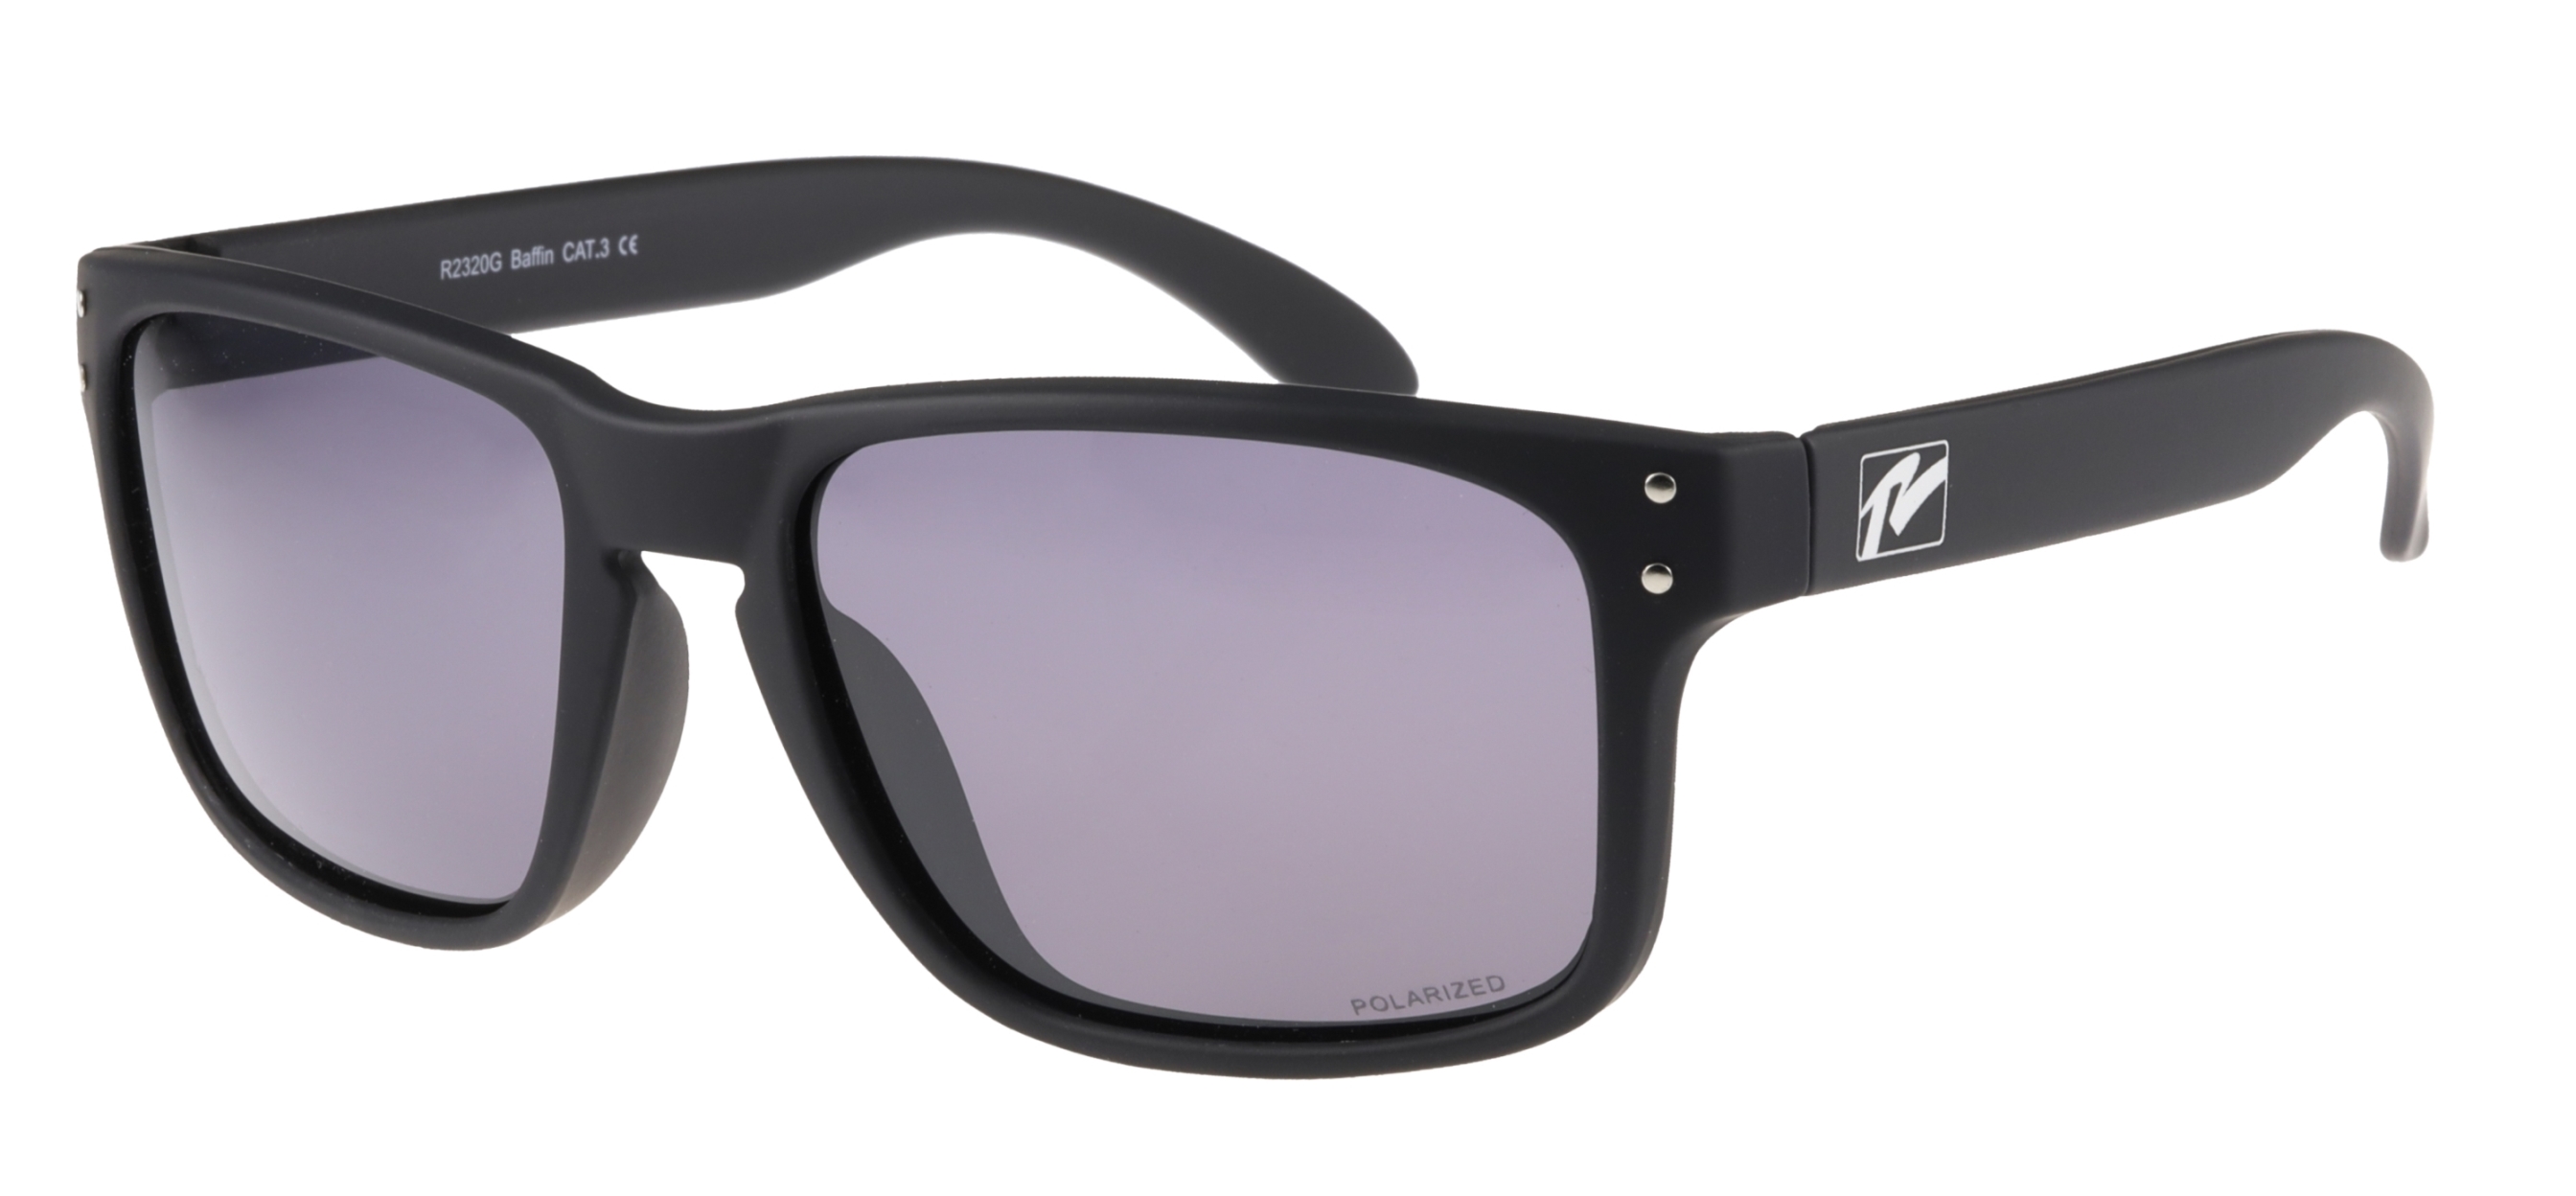 Polarized sunglasses  Relax Baffin R2320G standard